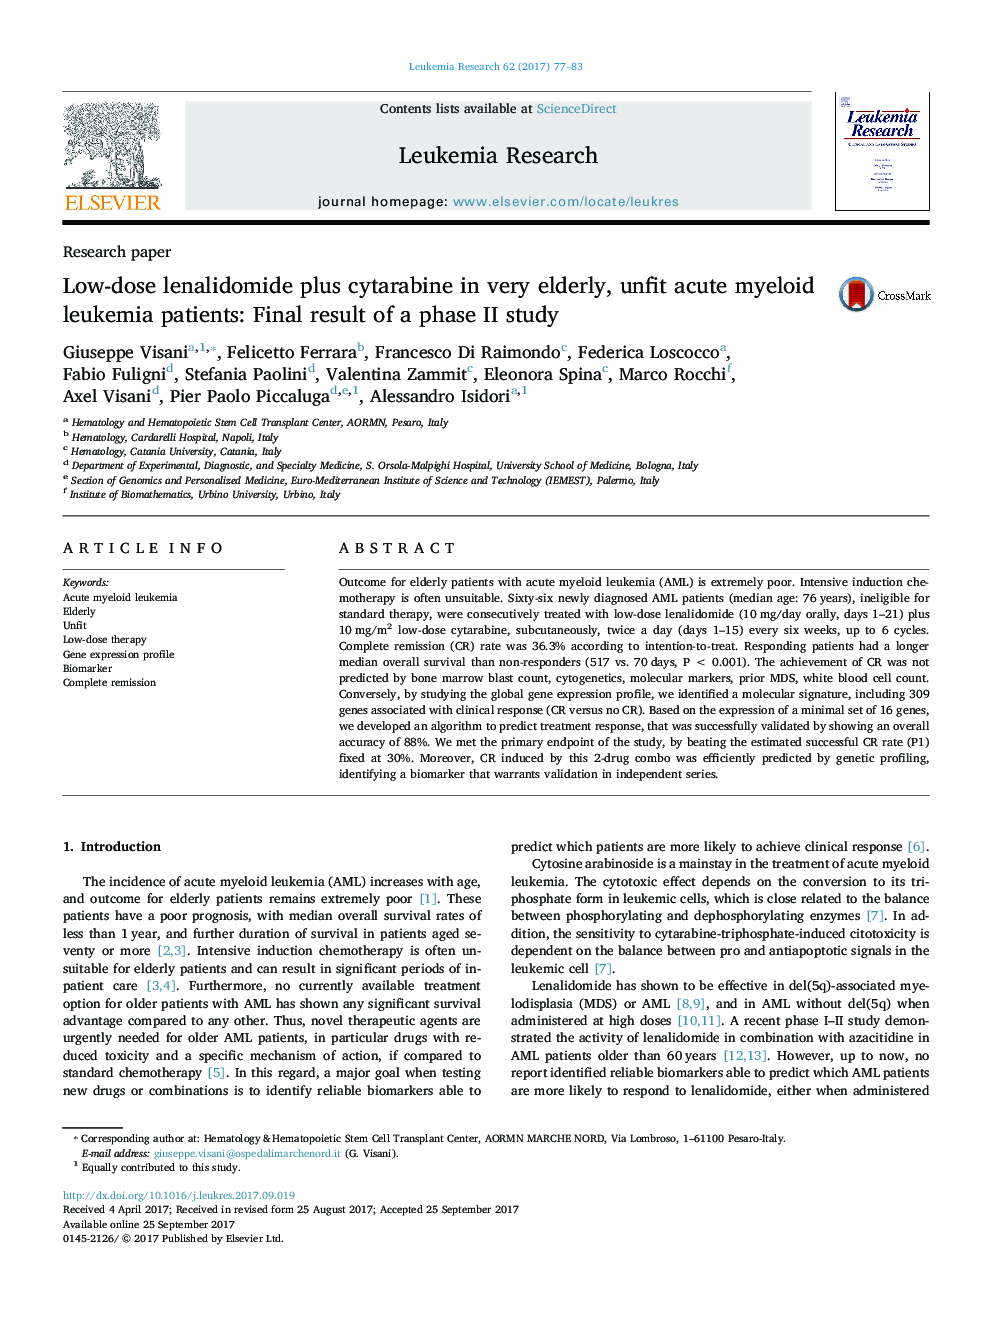 Low-dose lenalidomide plus cytarabine in very elderly, unfit acute myeloid leukemia patients: Final result of a phase II study